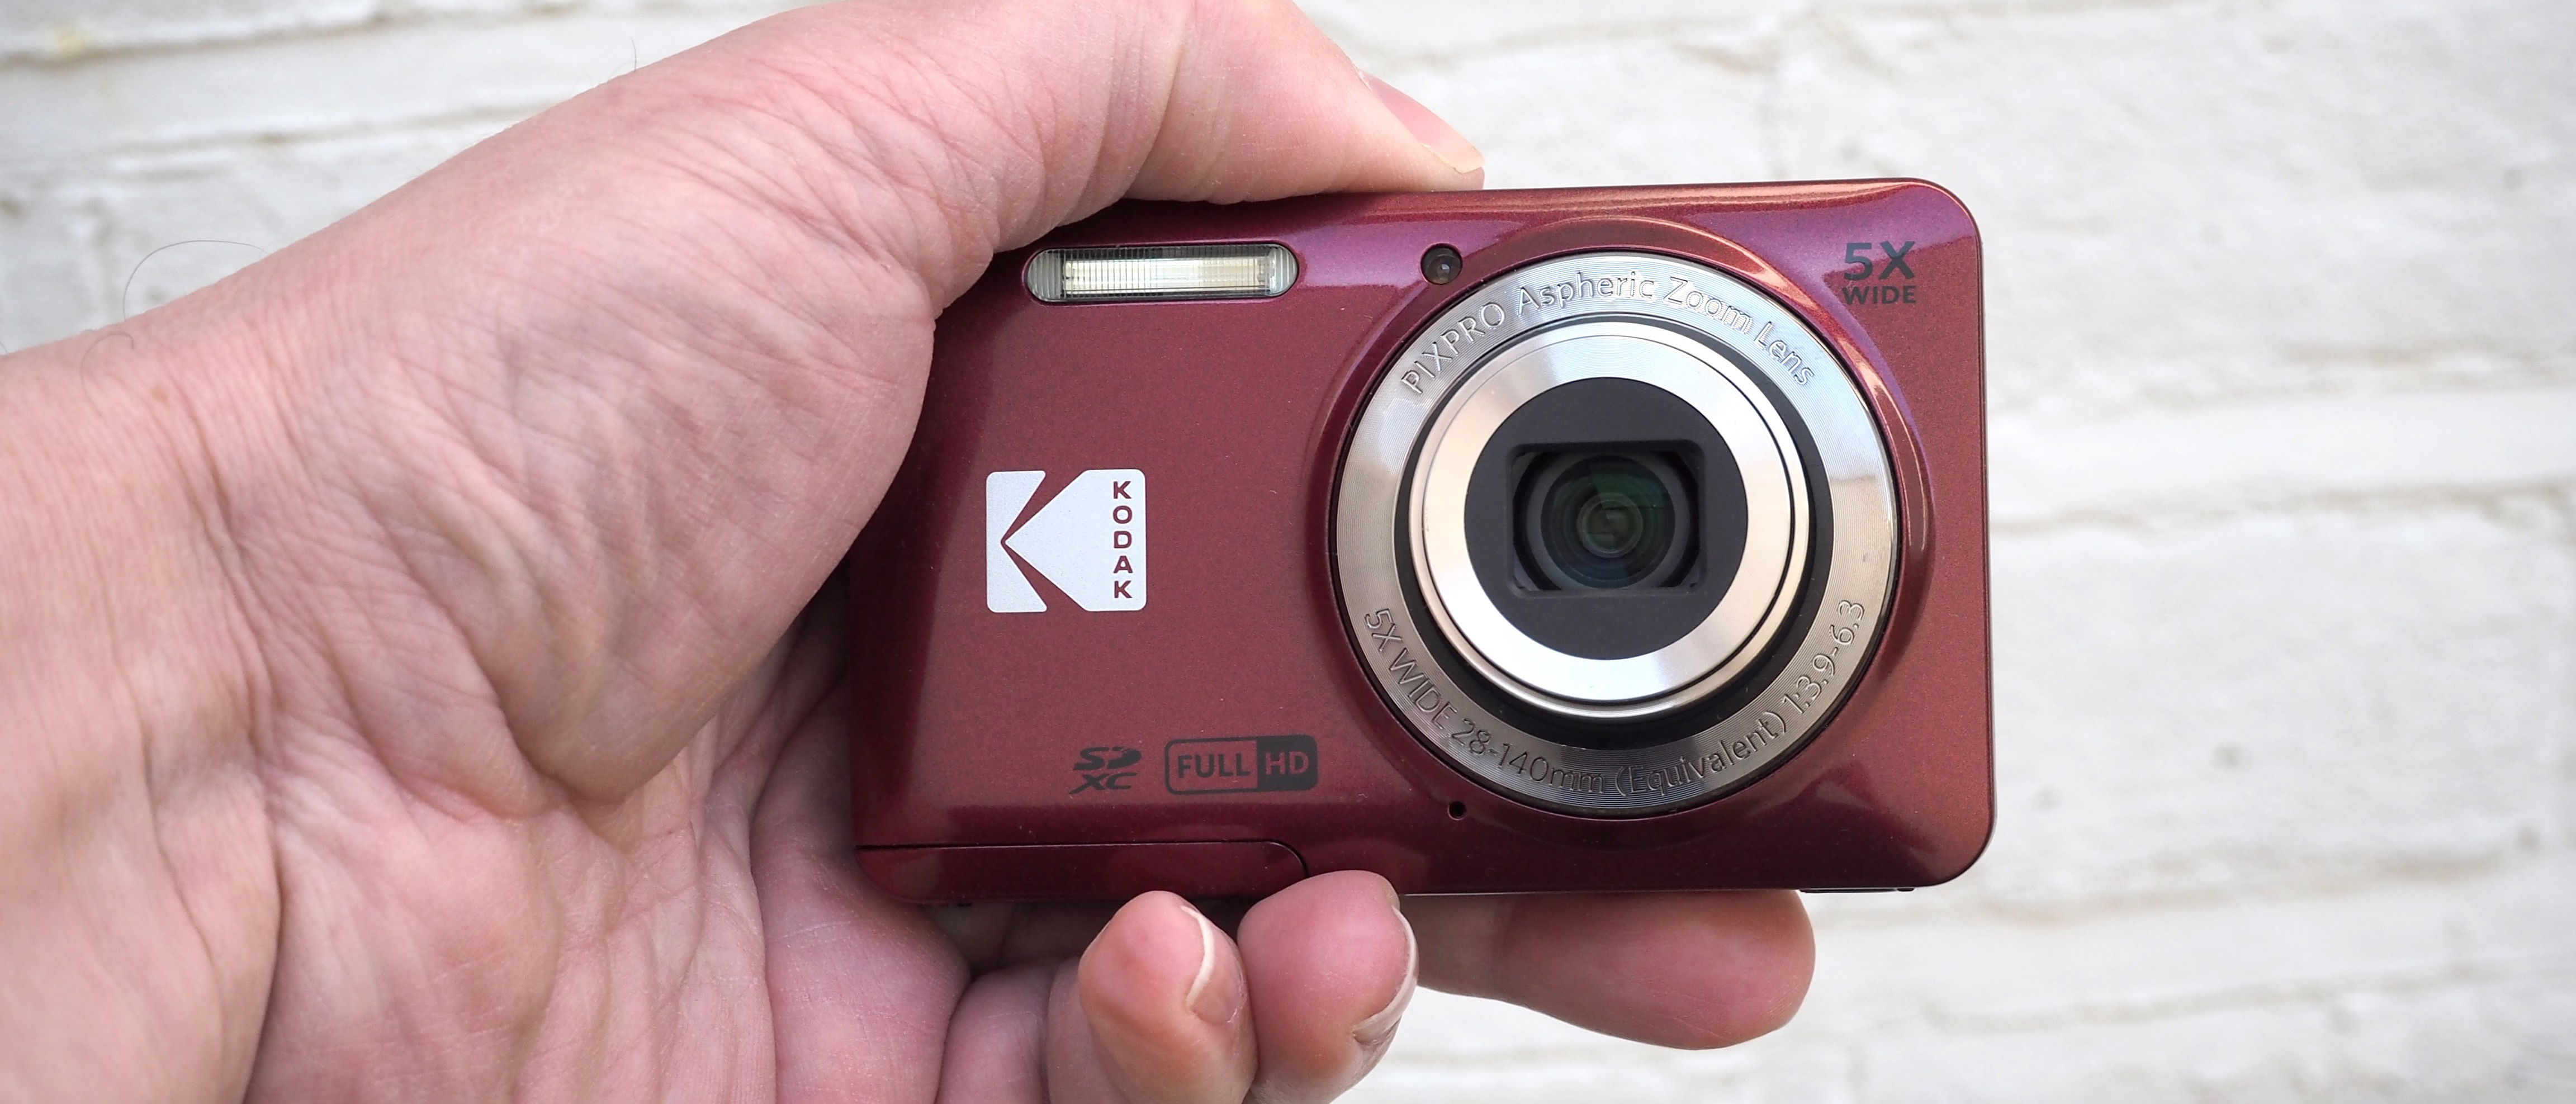 Kodak PIXPRO FZ45 Friendly Zoom Digital Camera with Camera Case Bundle